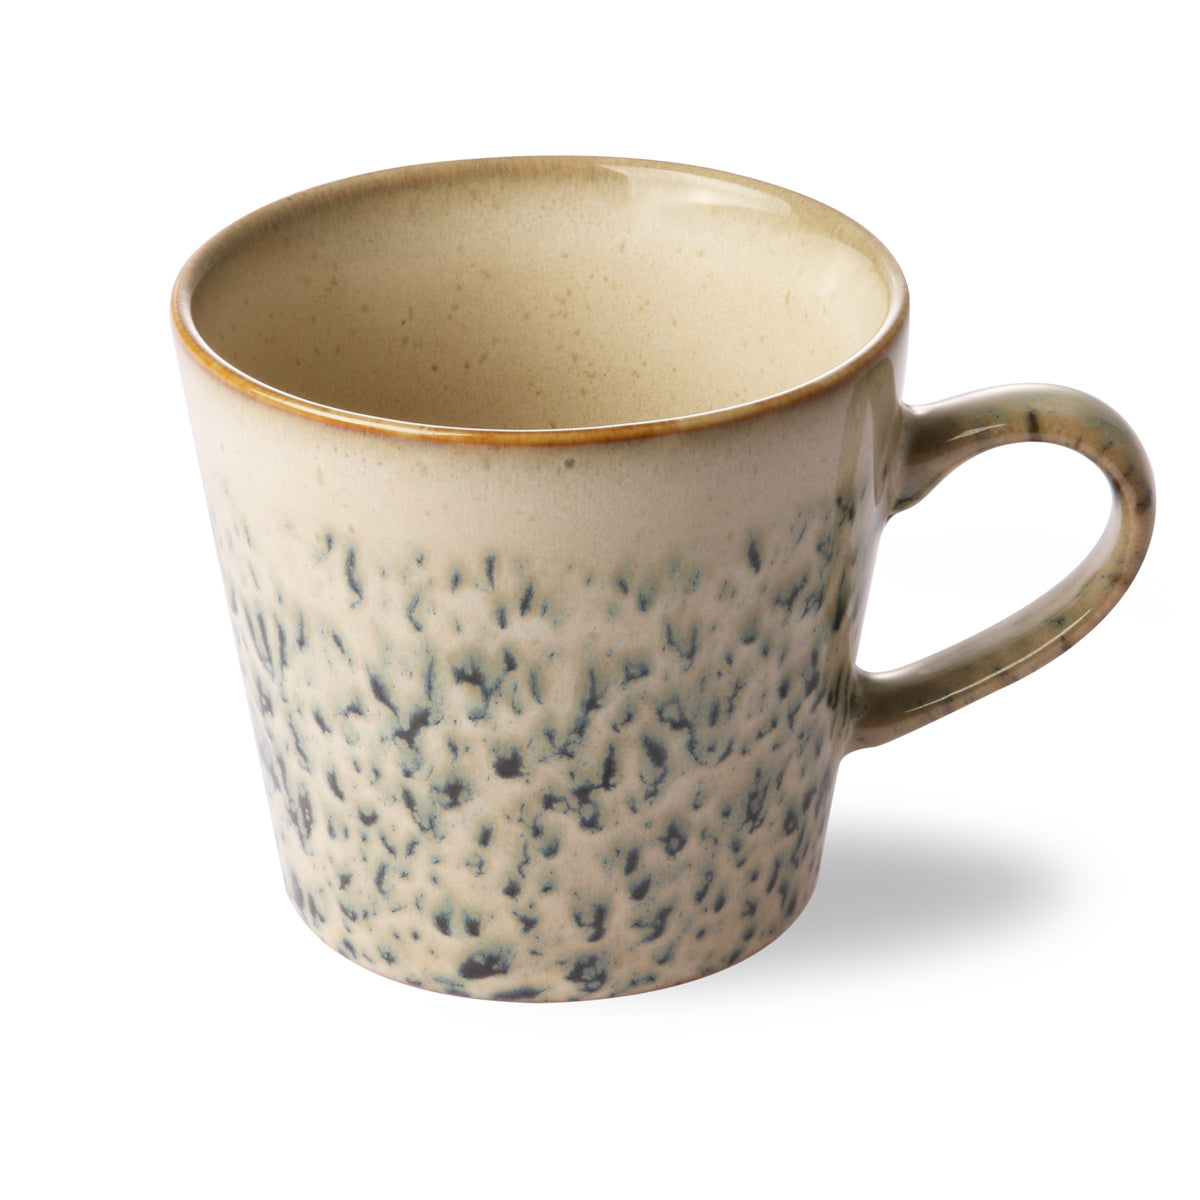 70s Ceramics Cappuccino Mug: Hail